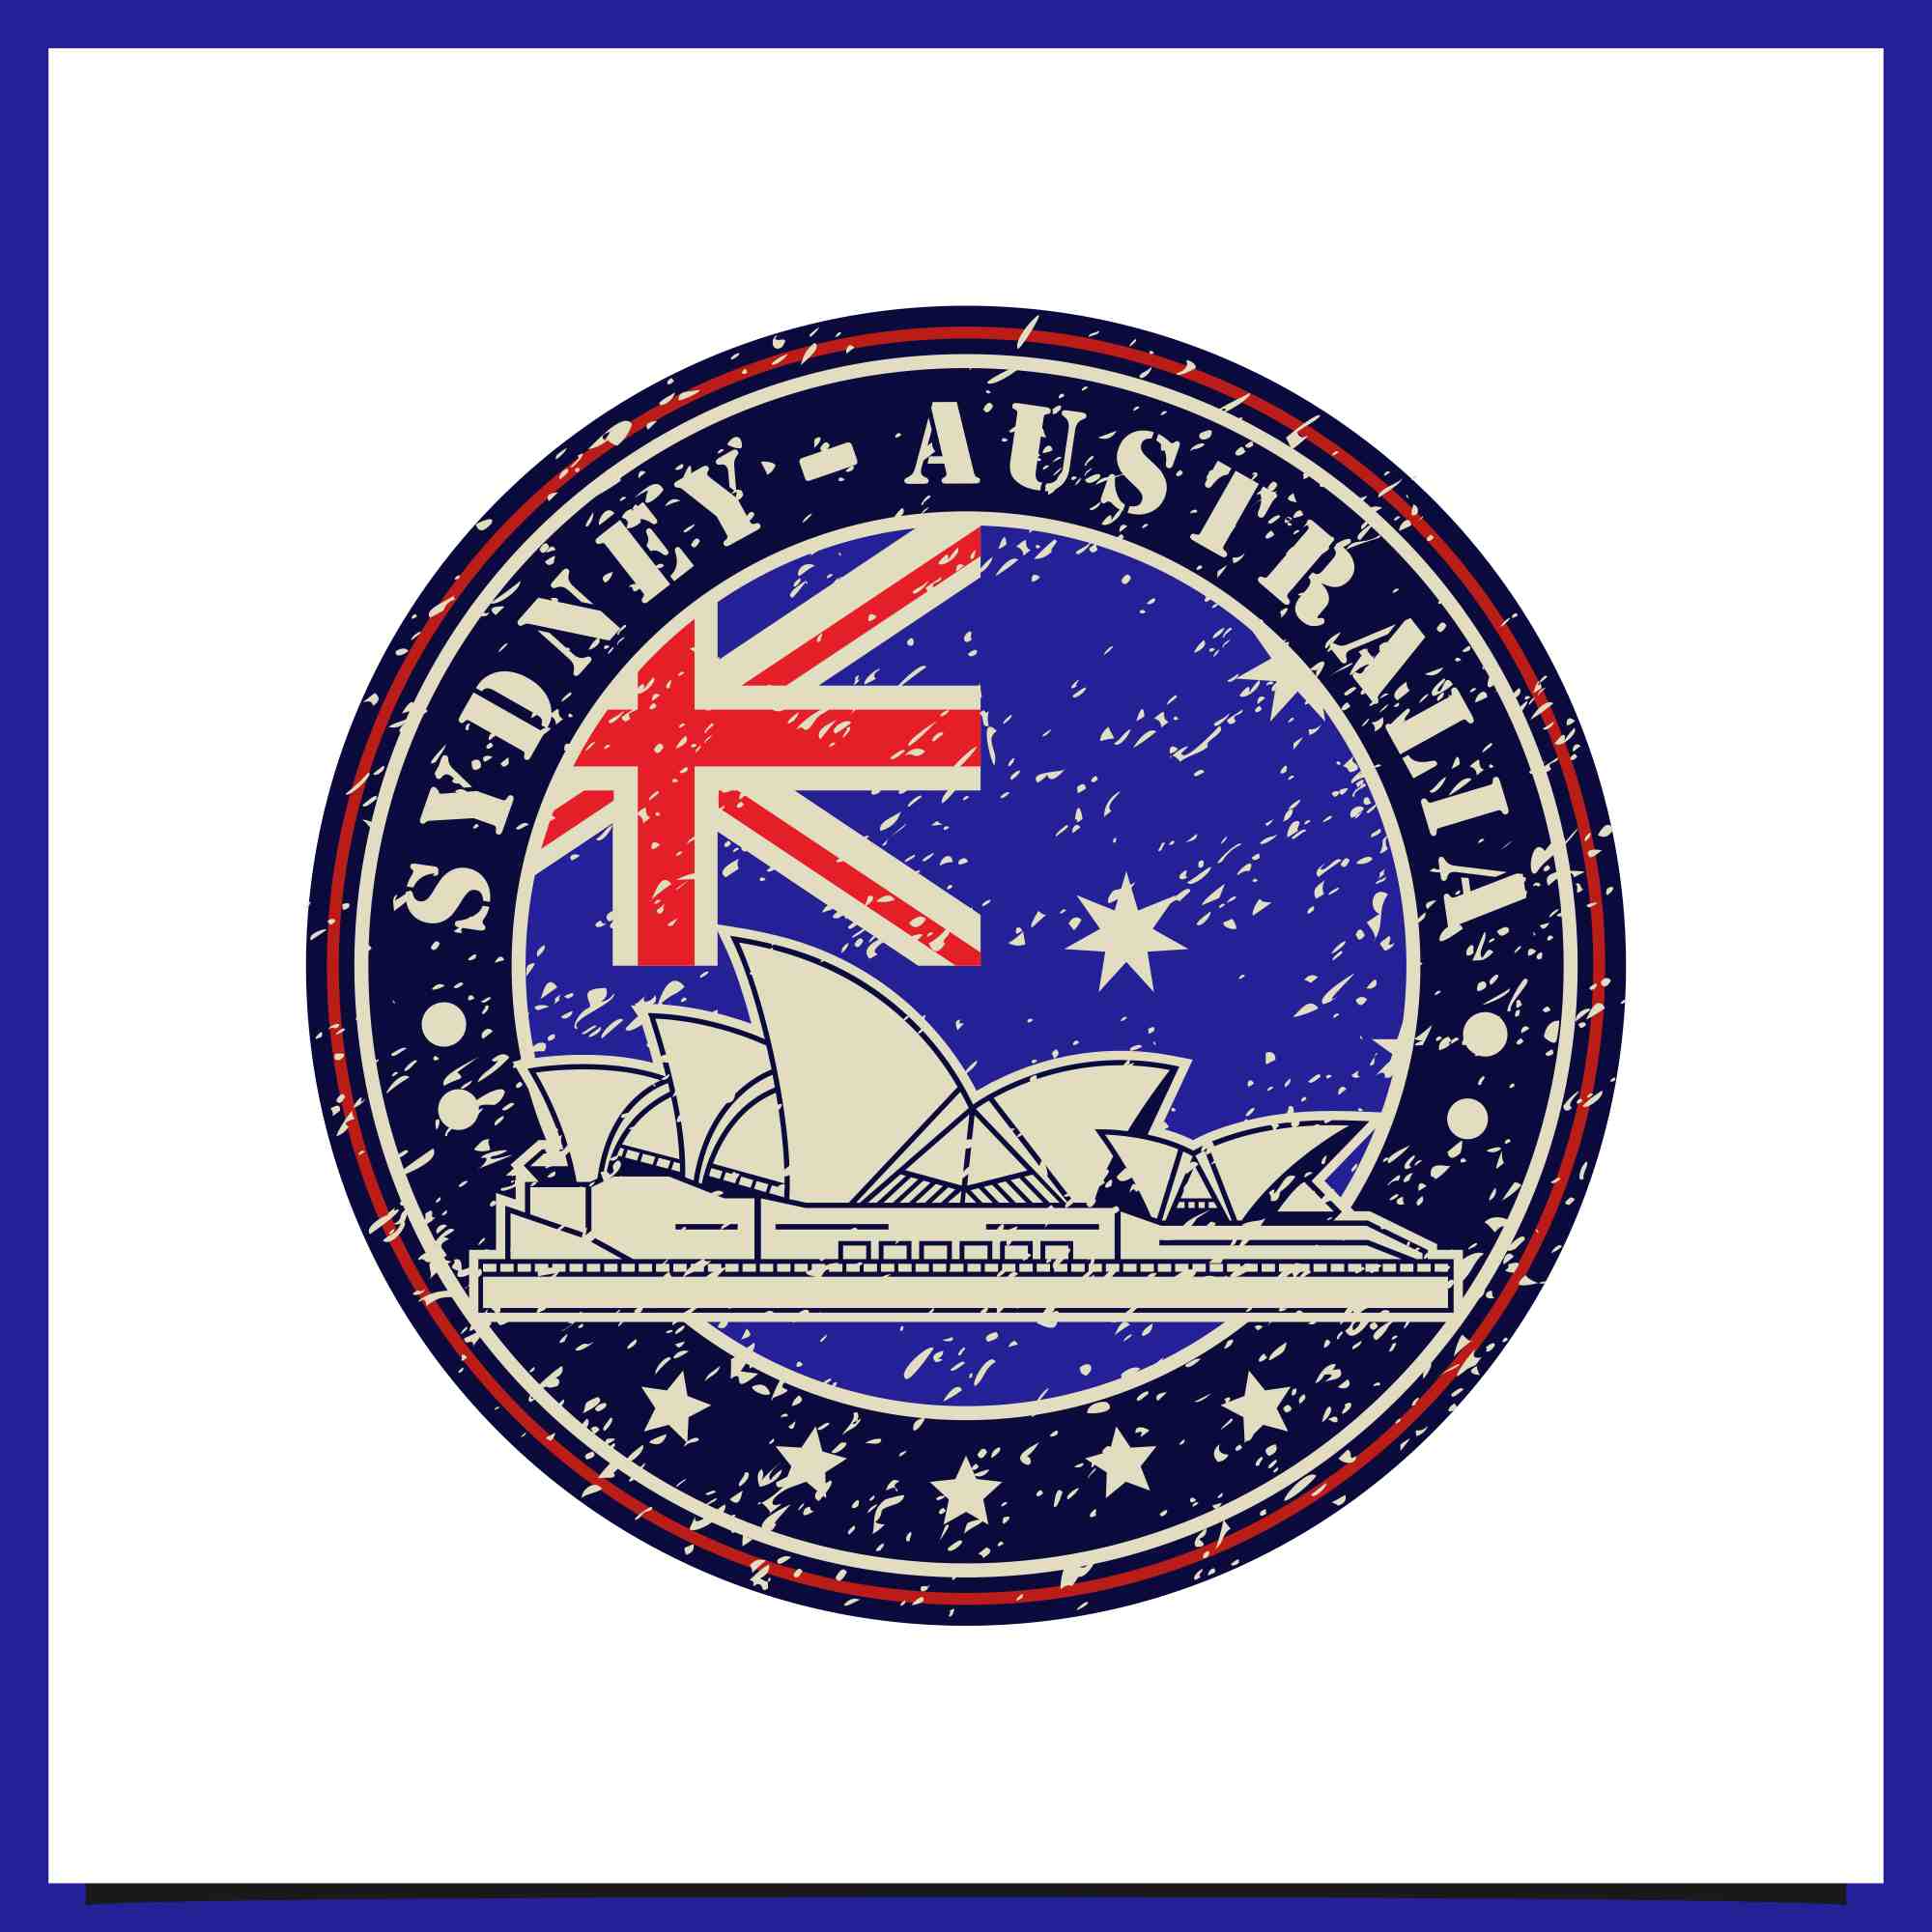 Sydney australia vector logo design - $4 preview image.